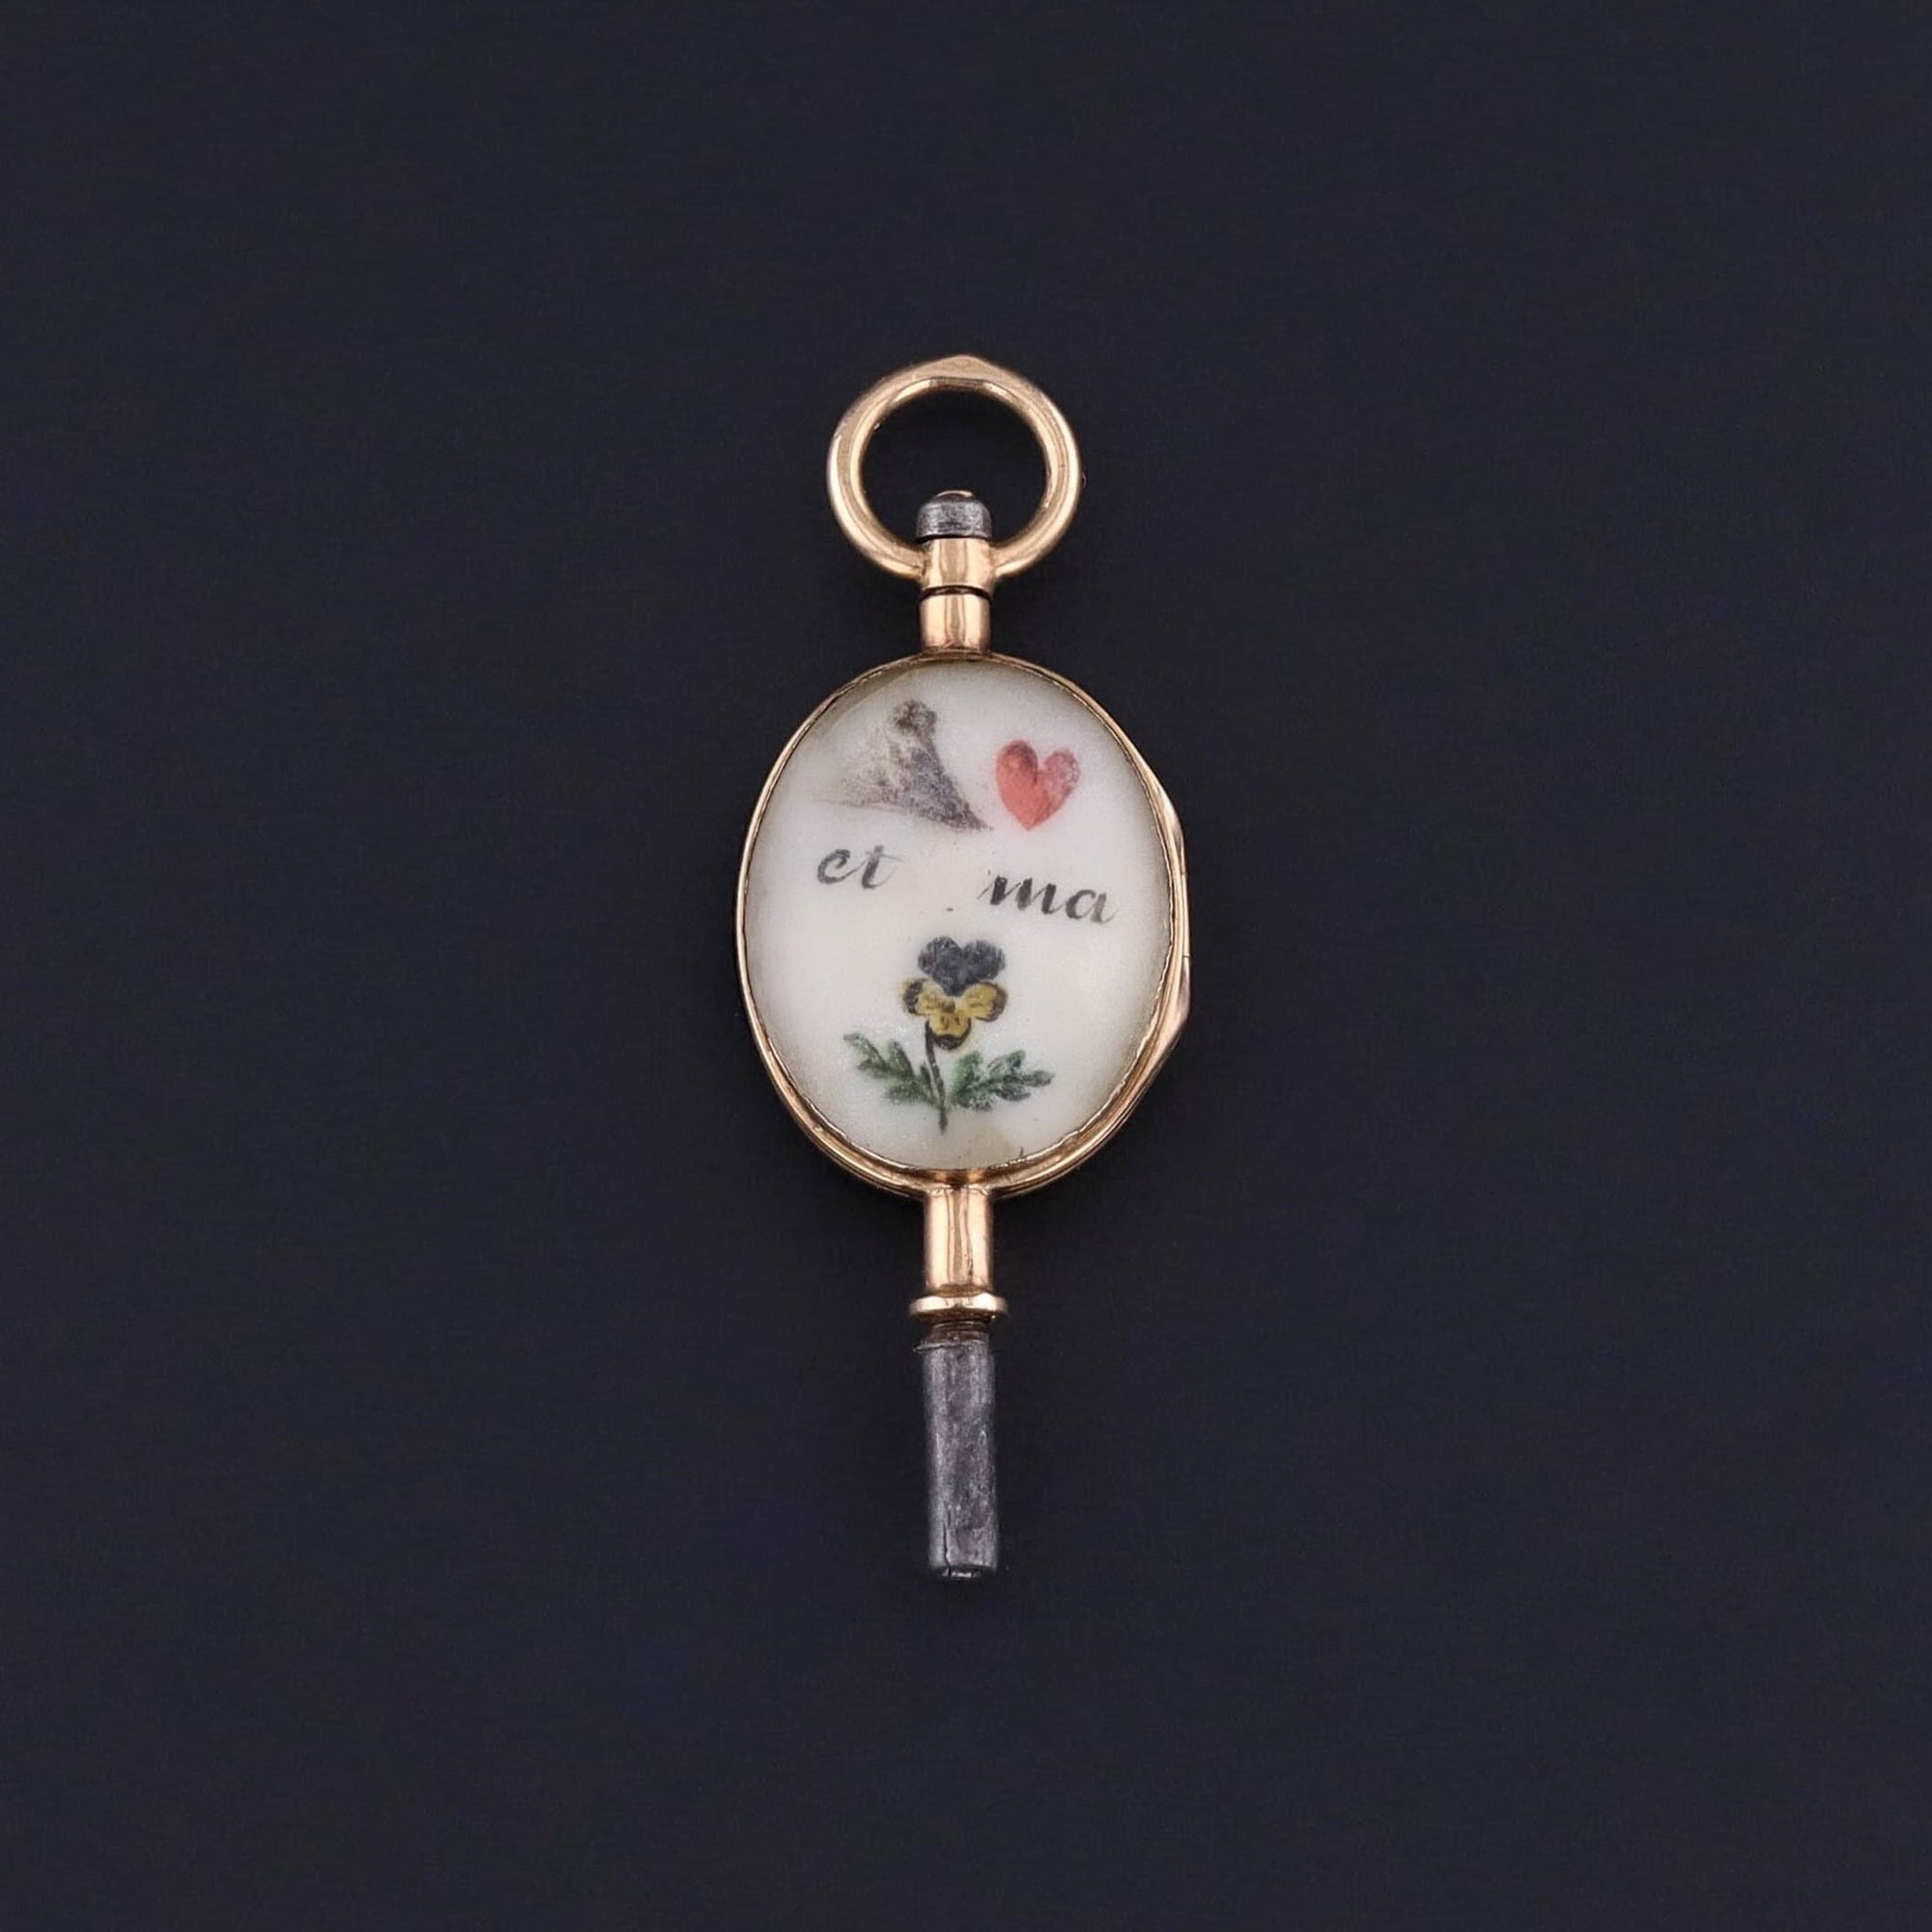 Antique Rebus Puzzle Watch Key of 18k Gold